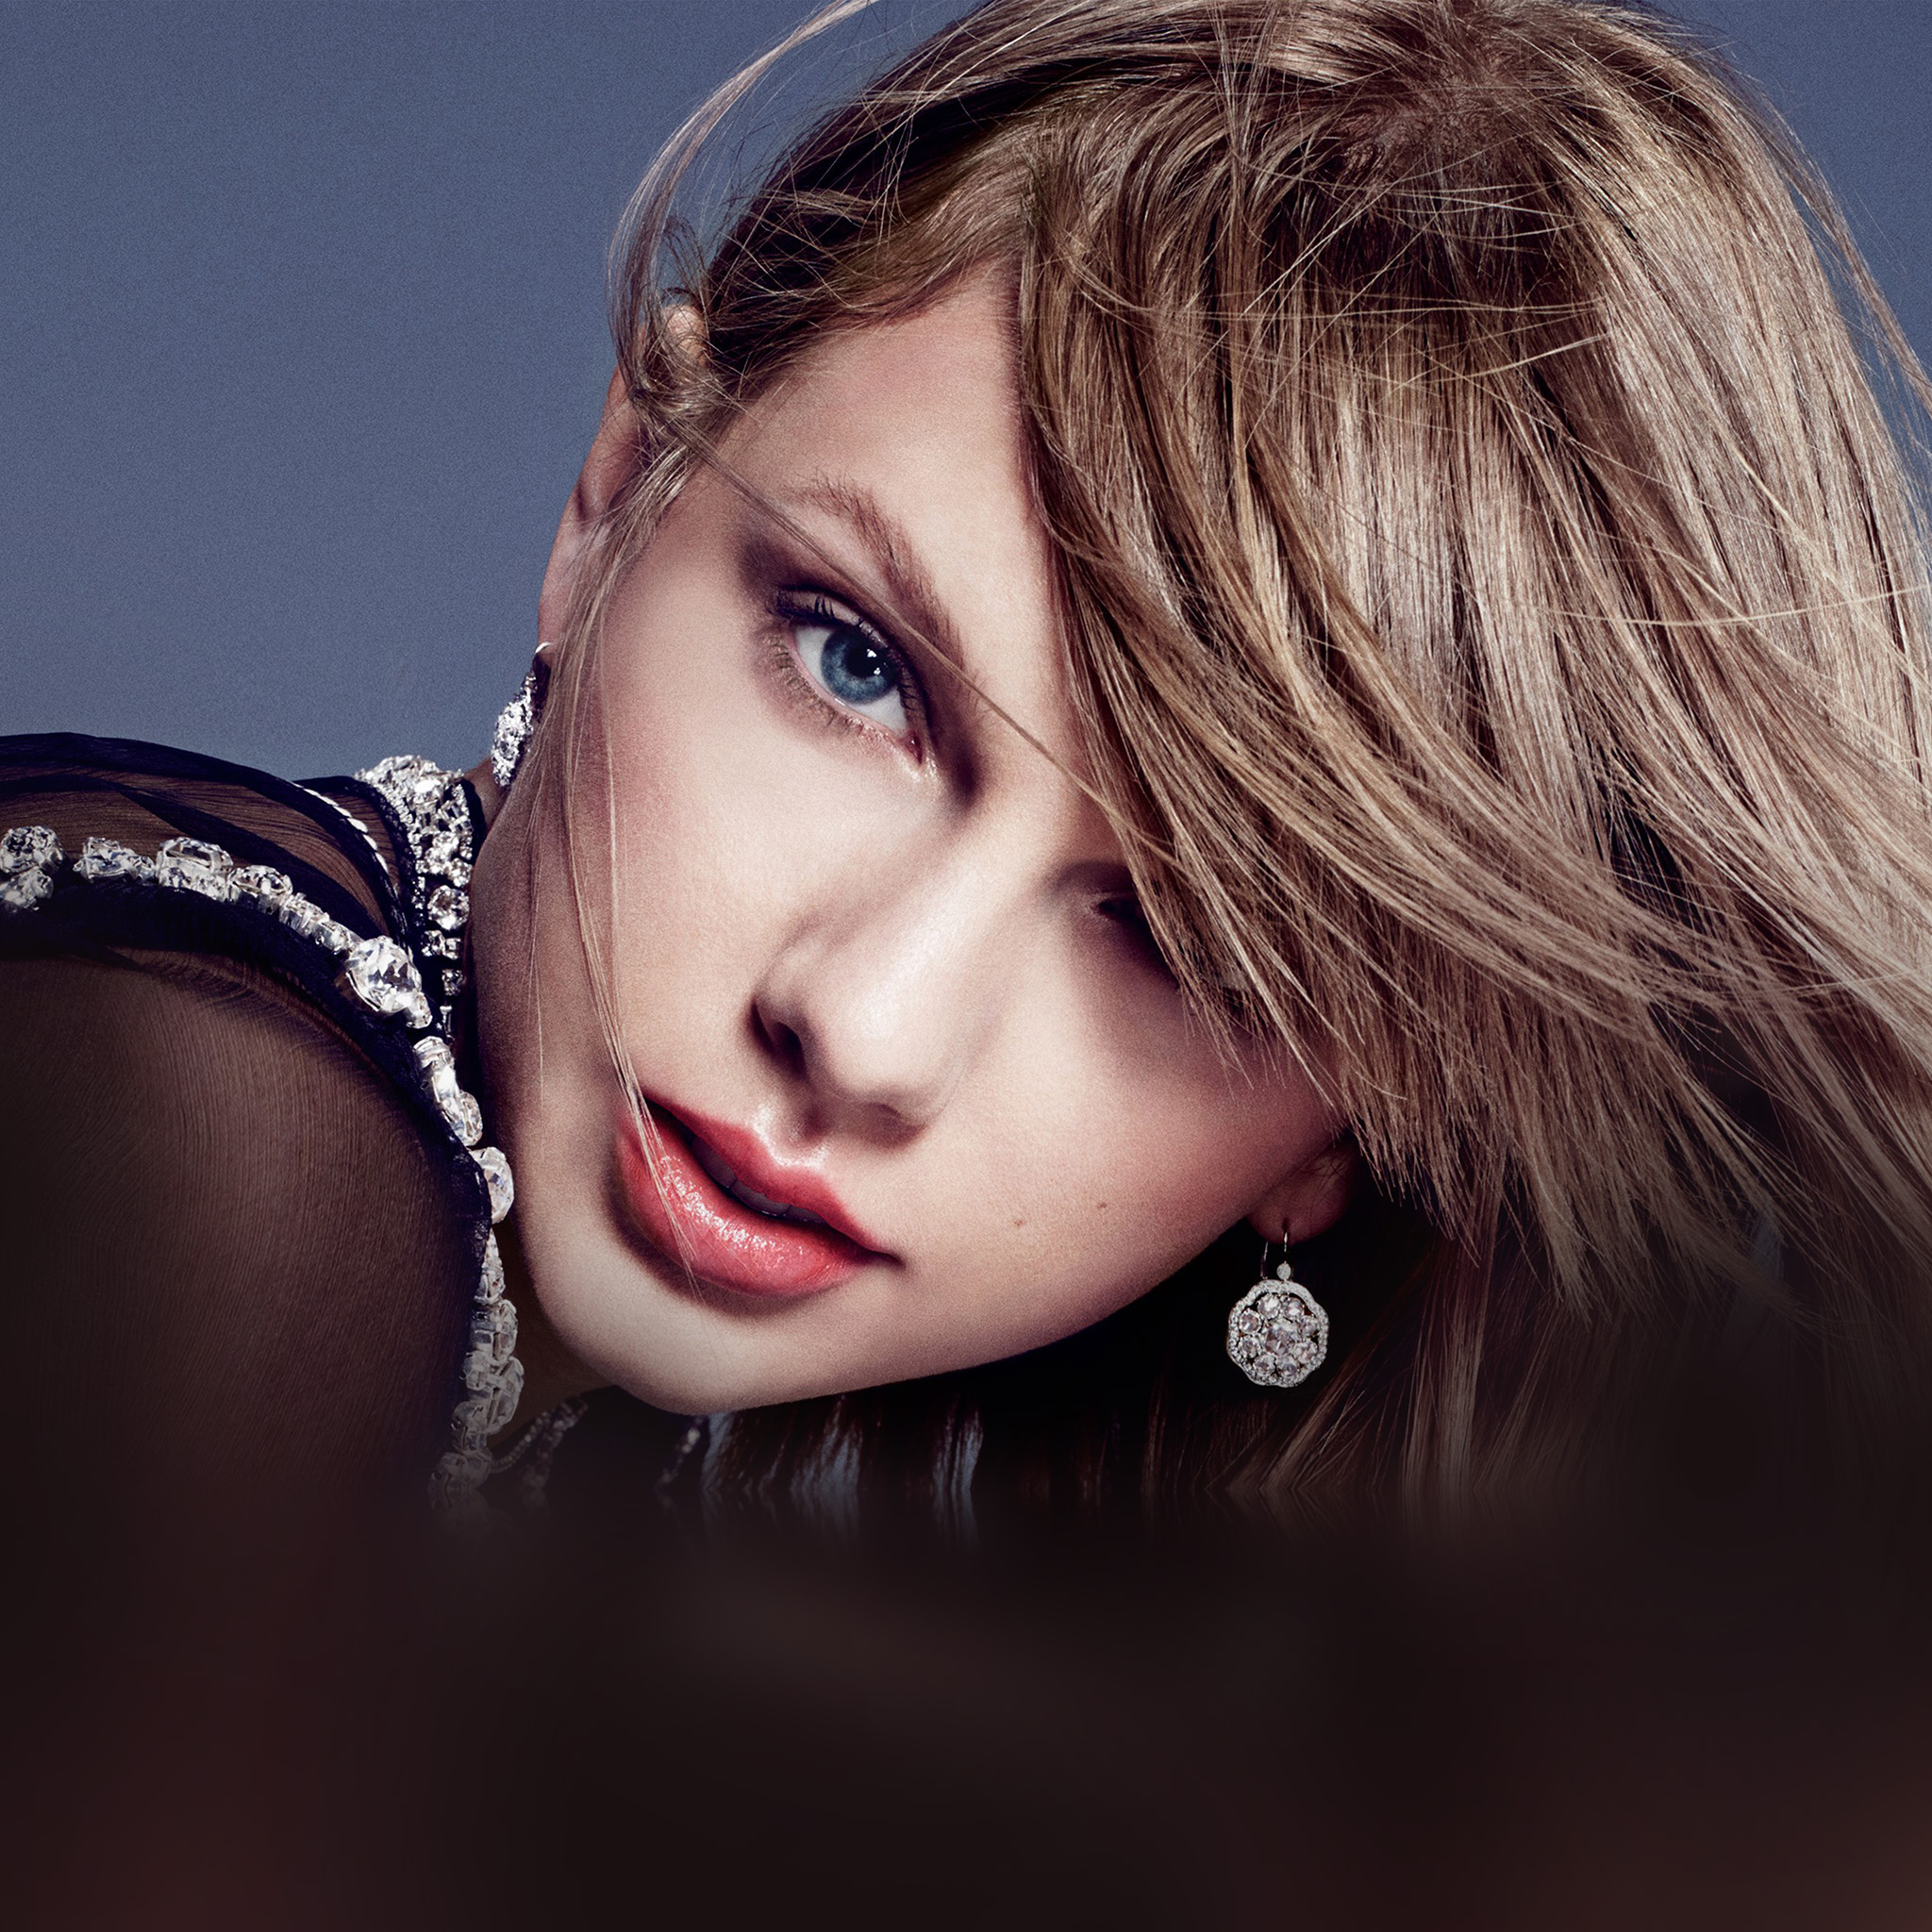 Ipad Retina - Taylor Swift Harper's Bazaar Cover , HD Wallpaper & Backgrounds